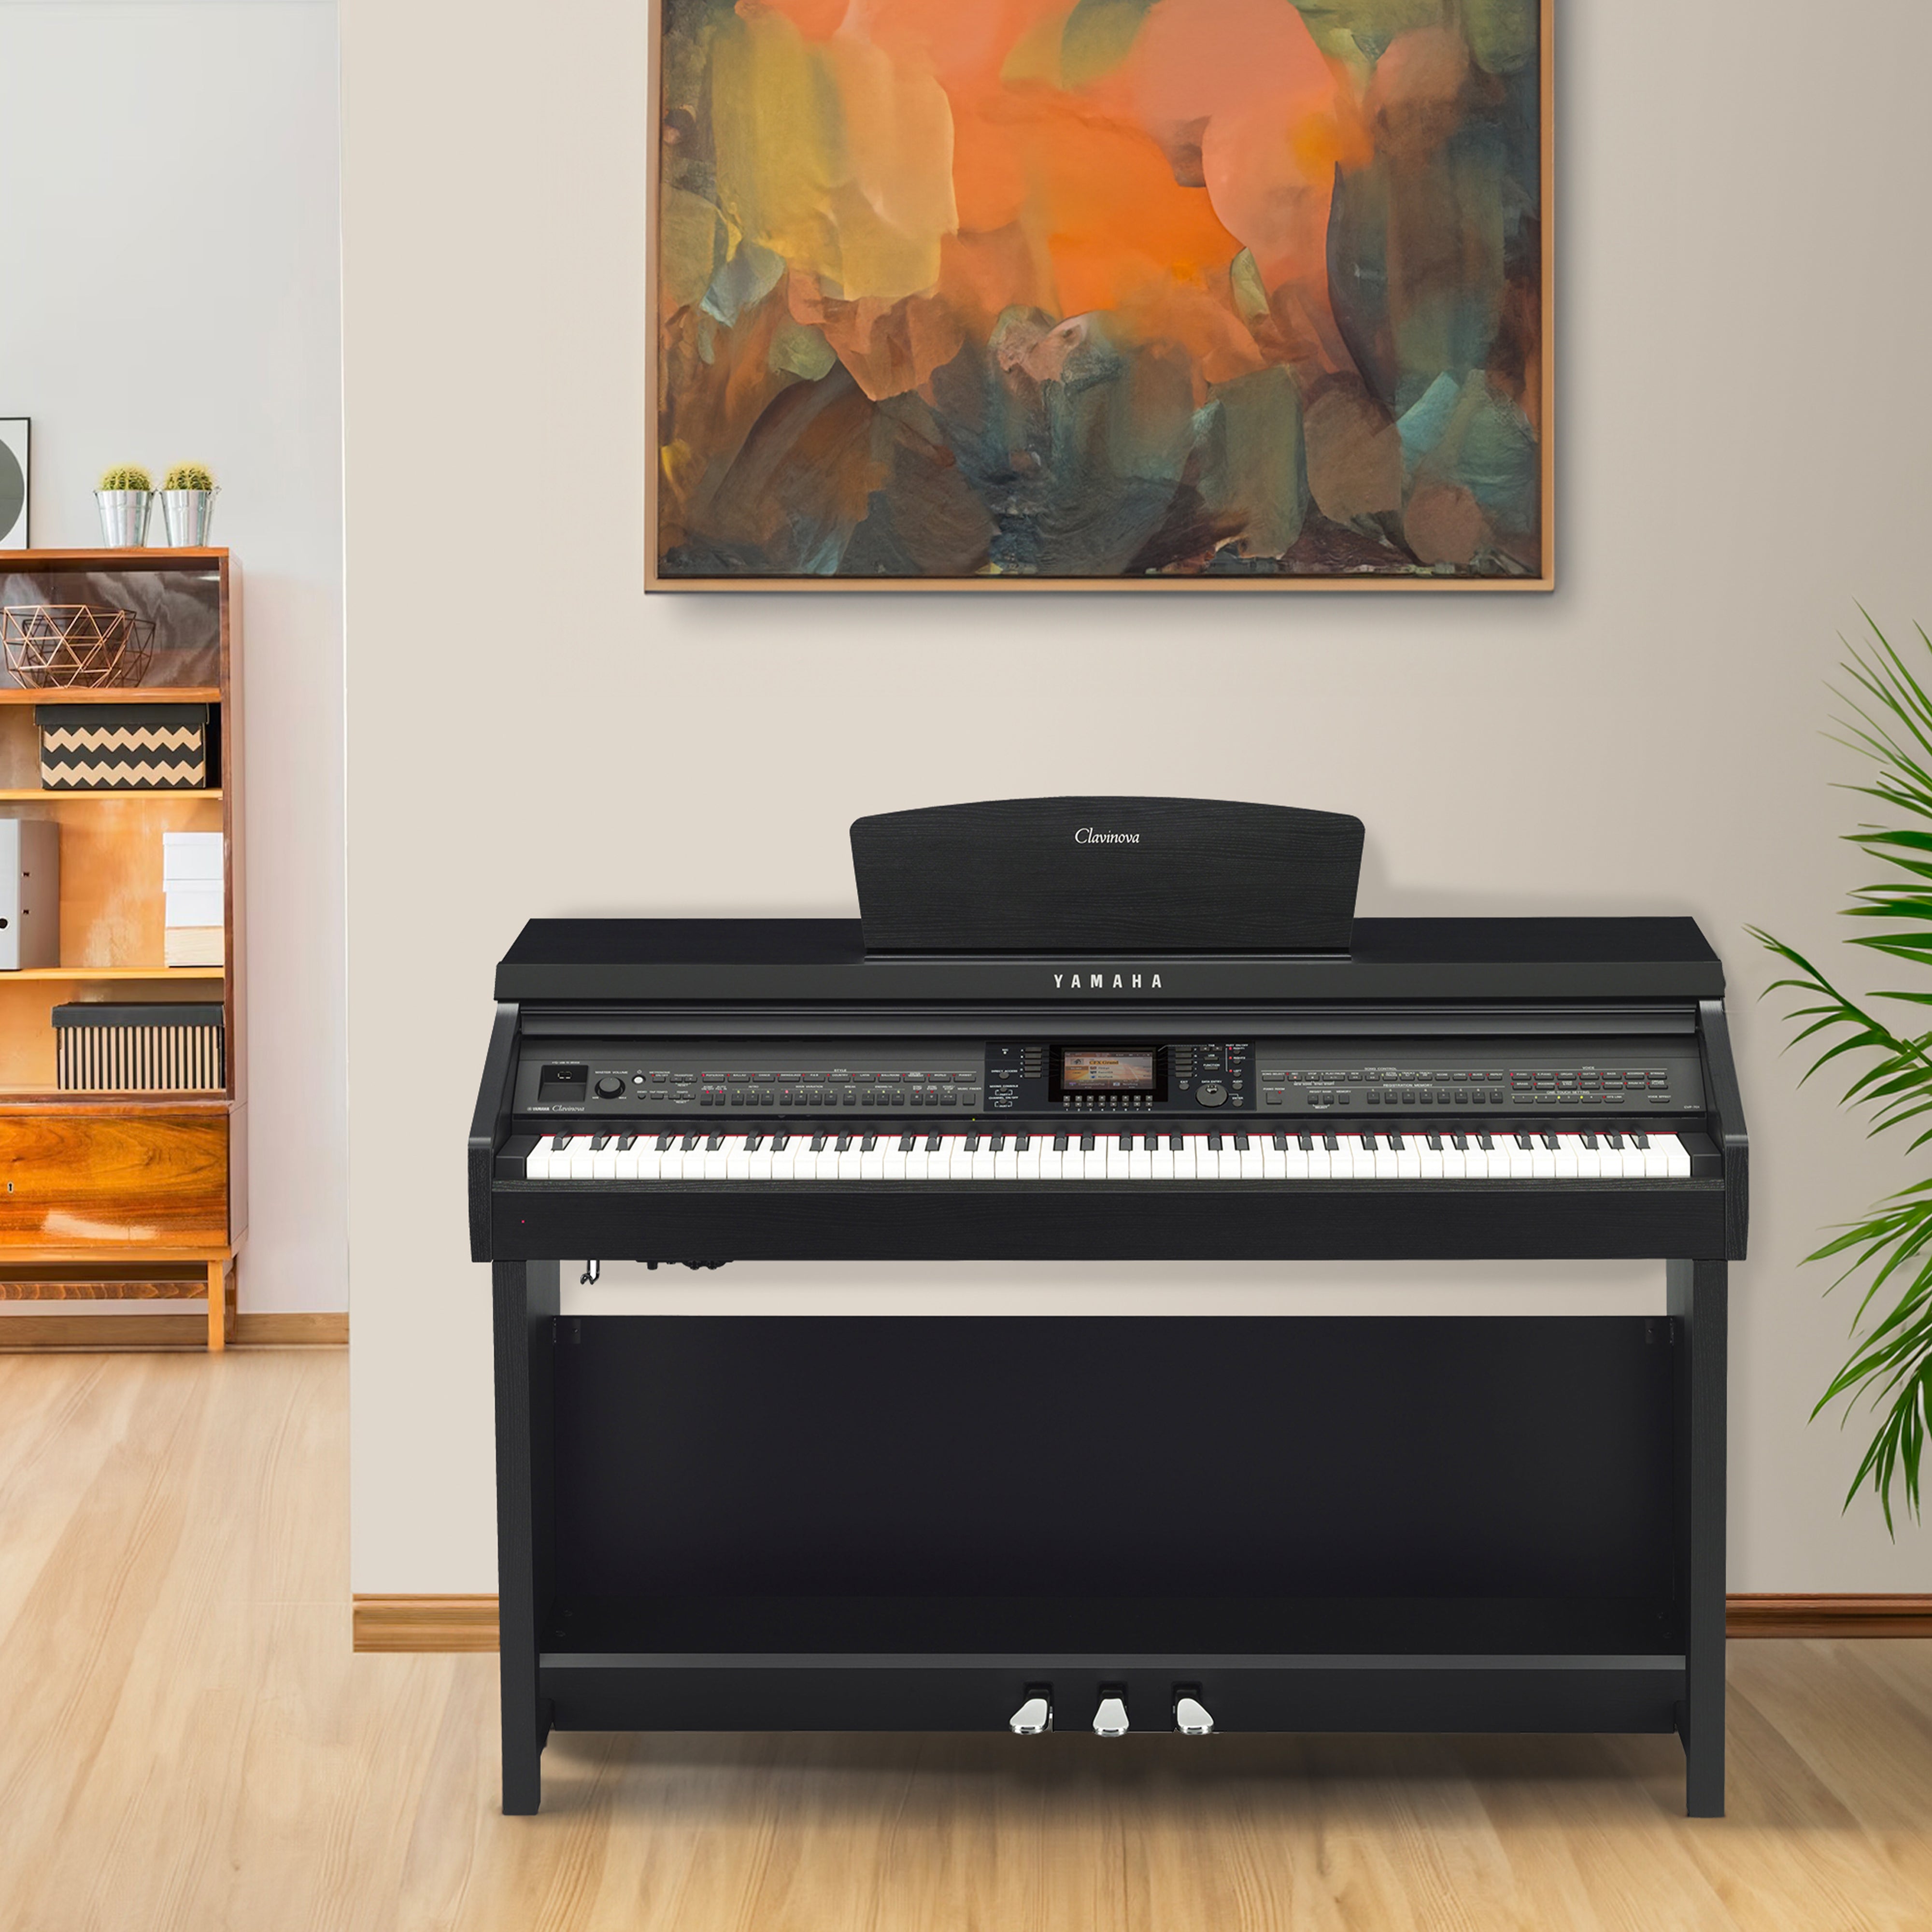 Yamaha Clavinova CVP-701 Digital Piano - Matte Black - in a stylish living space